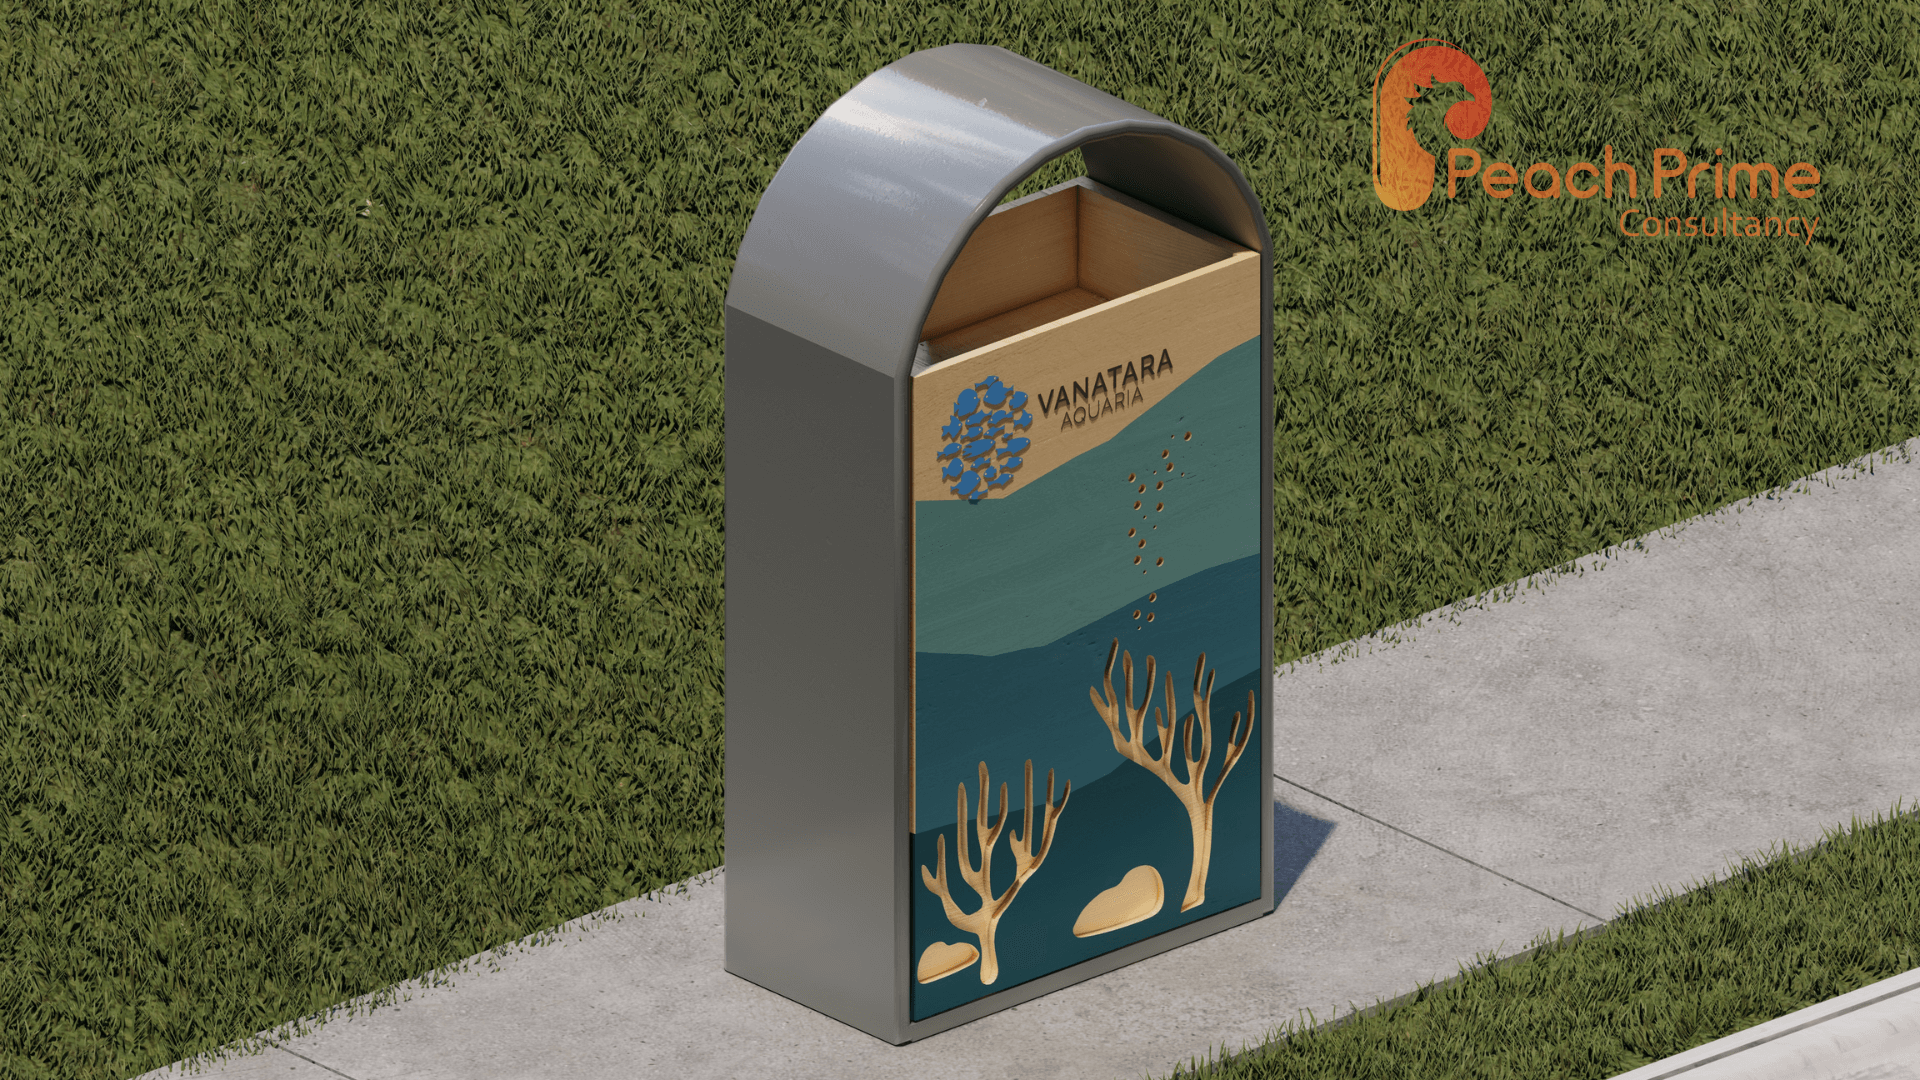 Customized Trash Can Project at Vantara Aquatia